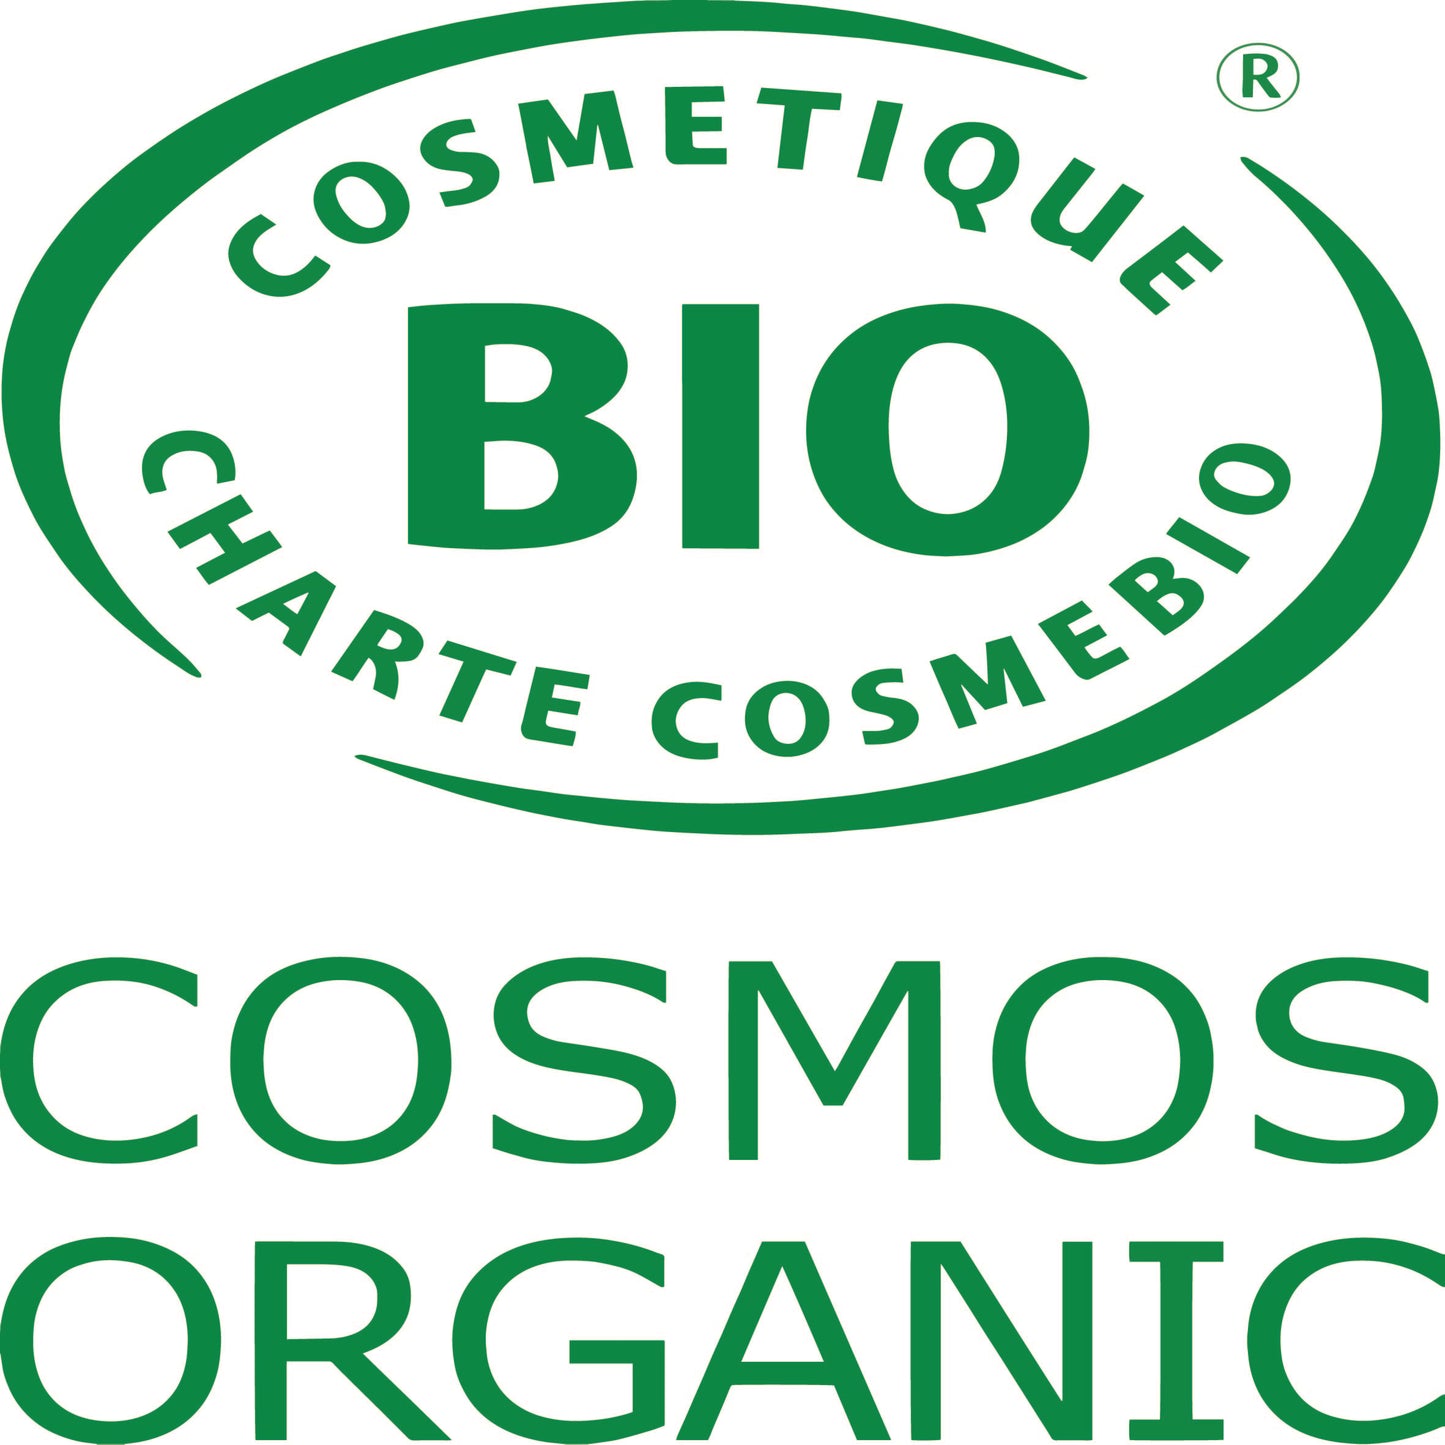 Organic Certified Solid Soap - Jasmine with Chamomile Flowers 90g - Earthsenseorganics